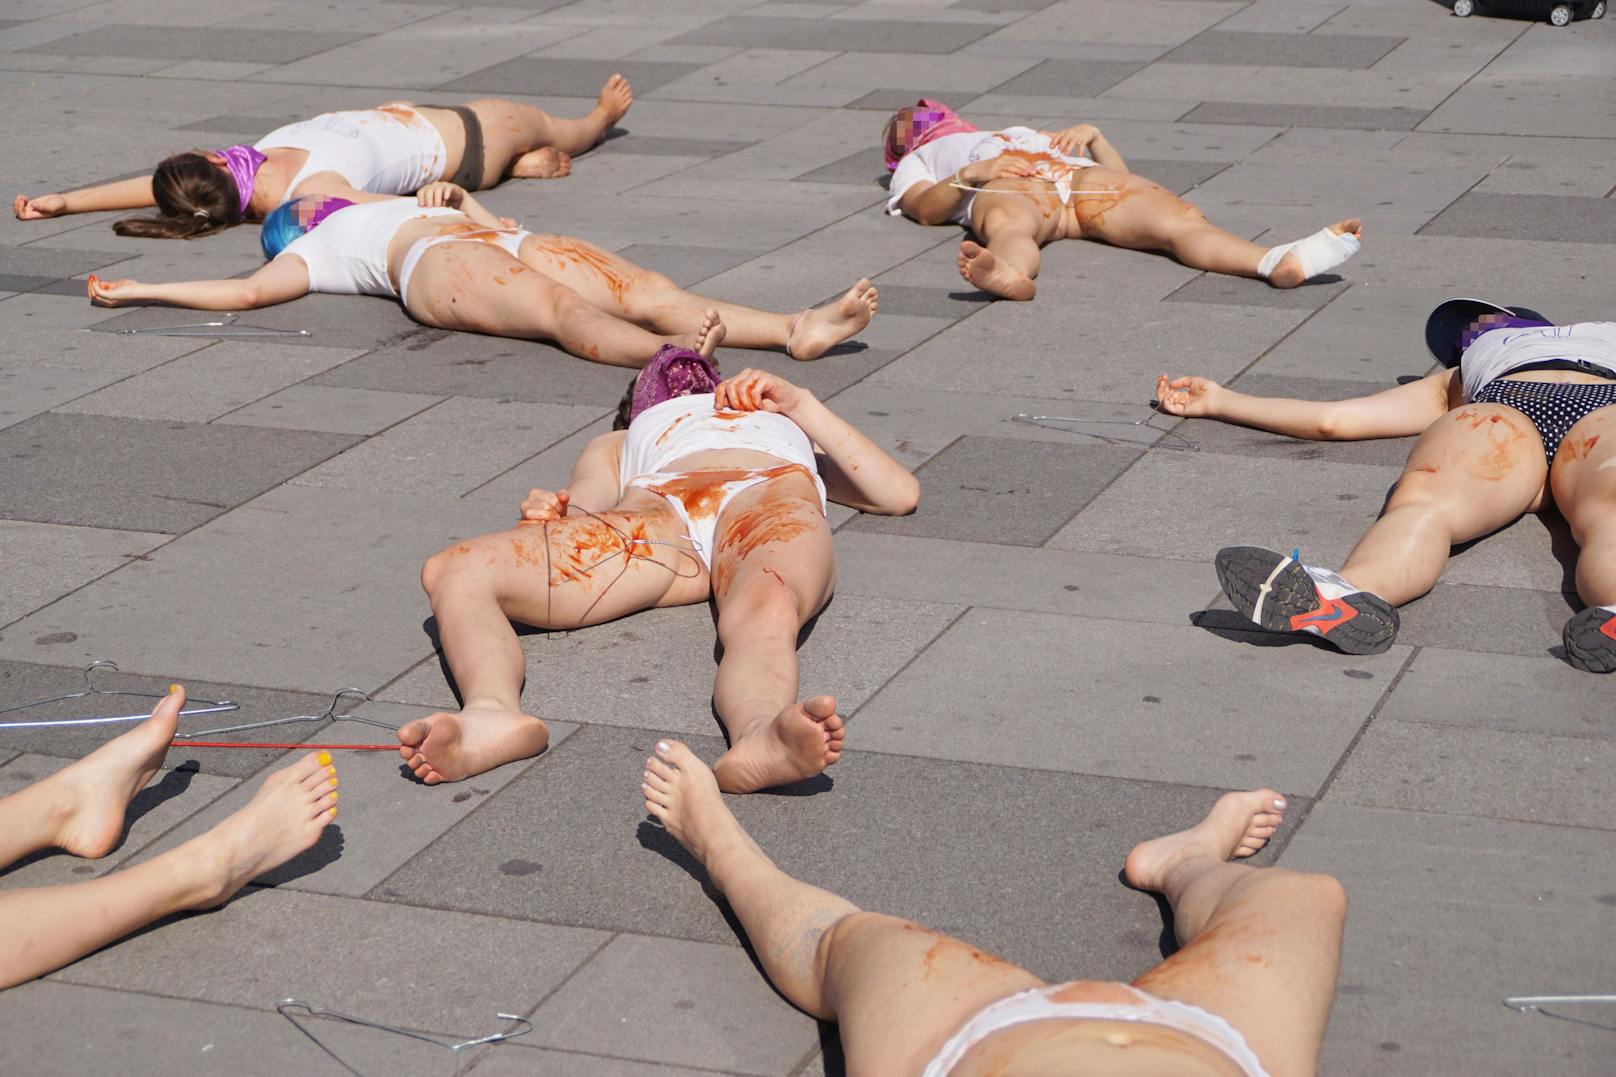 Blut, Kleiderbügel – Abtreibungs-Protest am Stephansdom